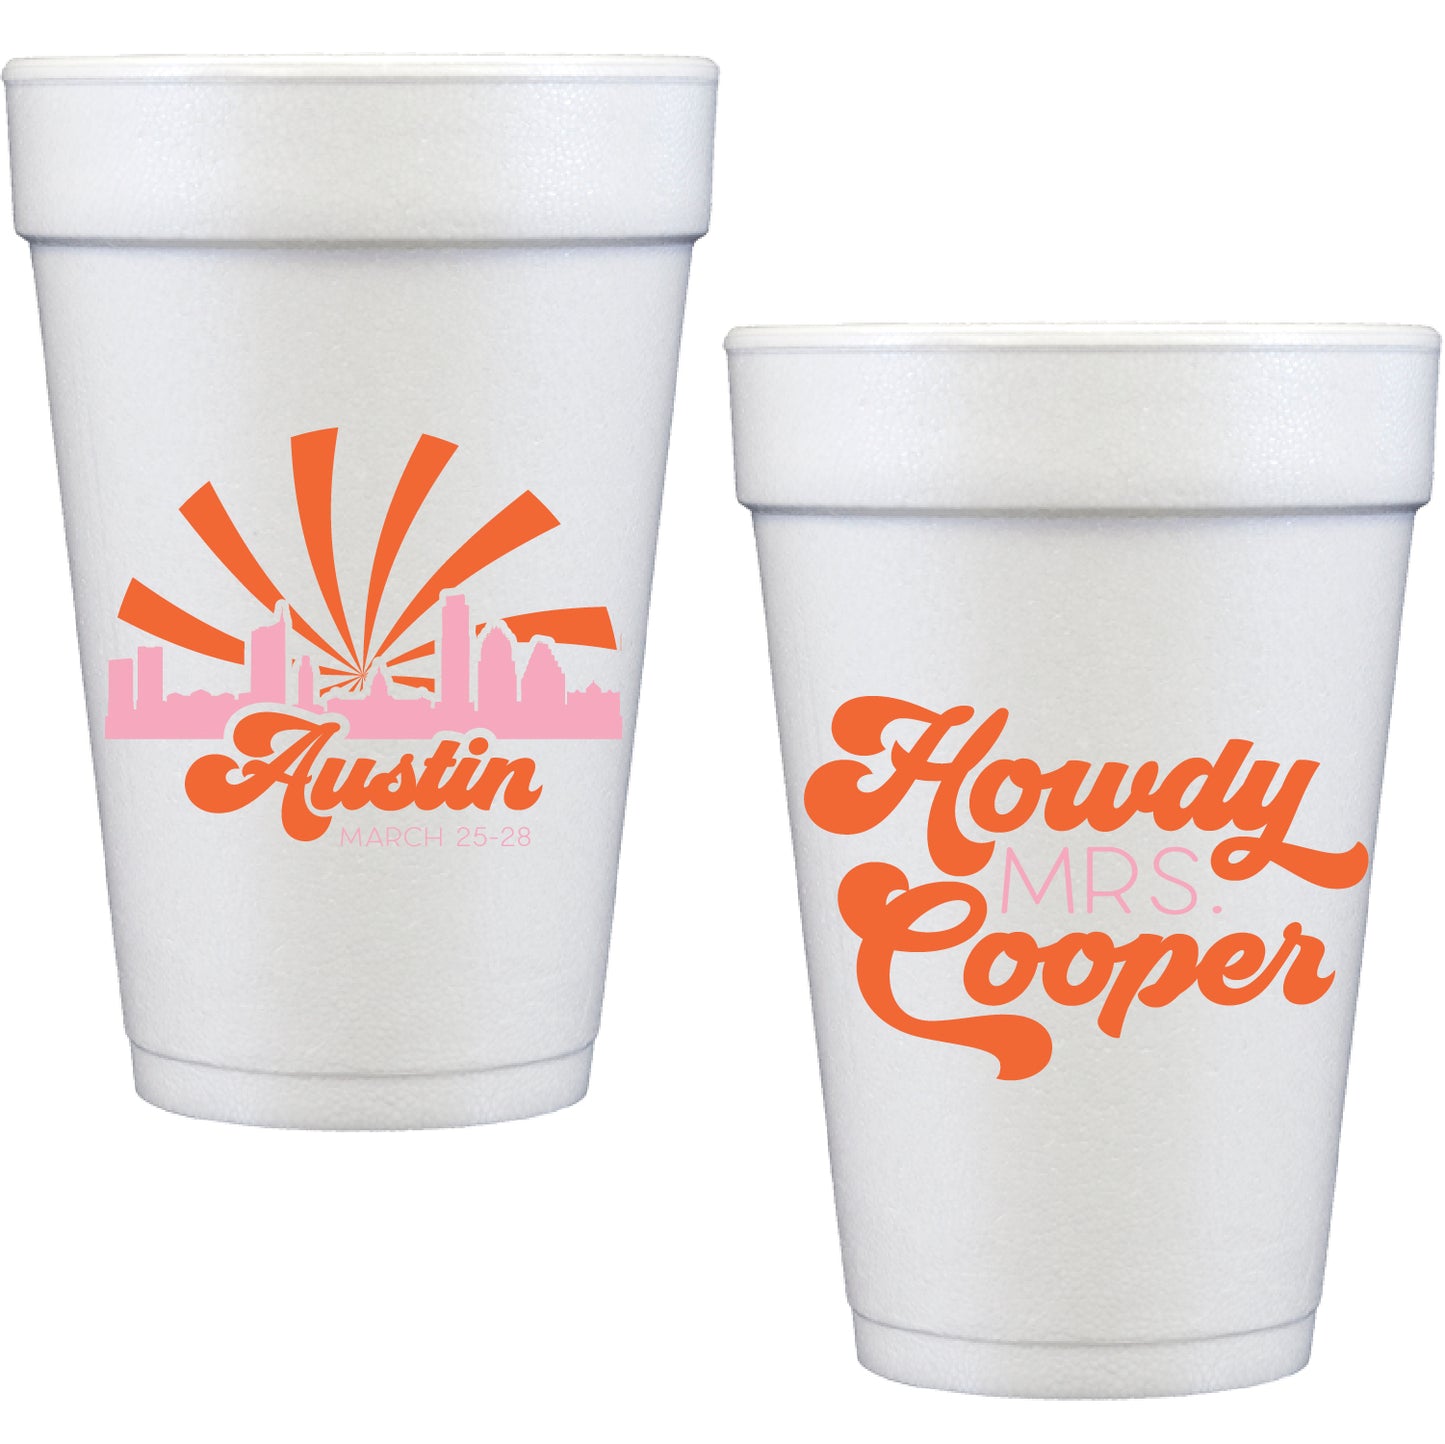 austin | styrofoam cups